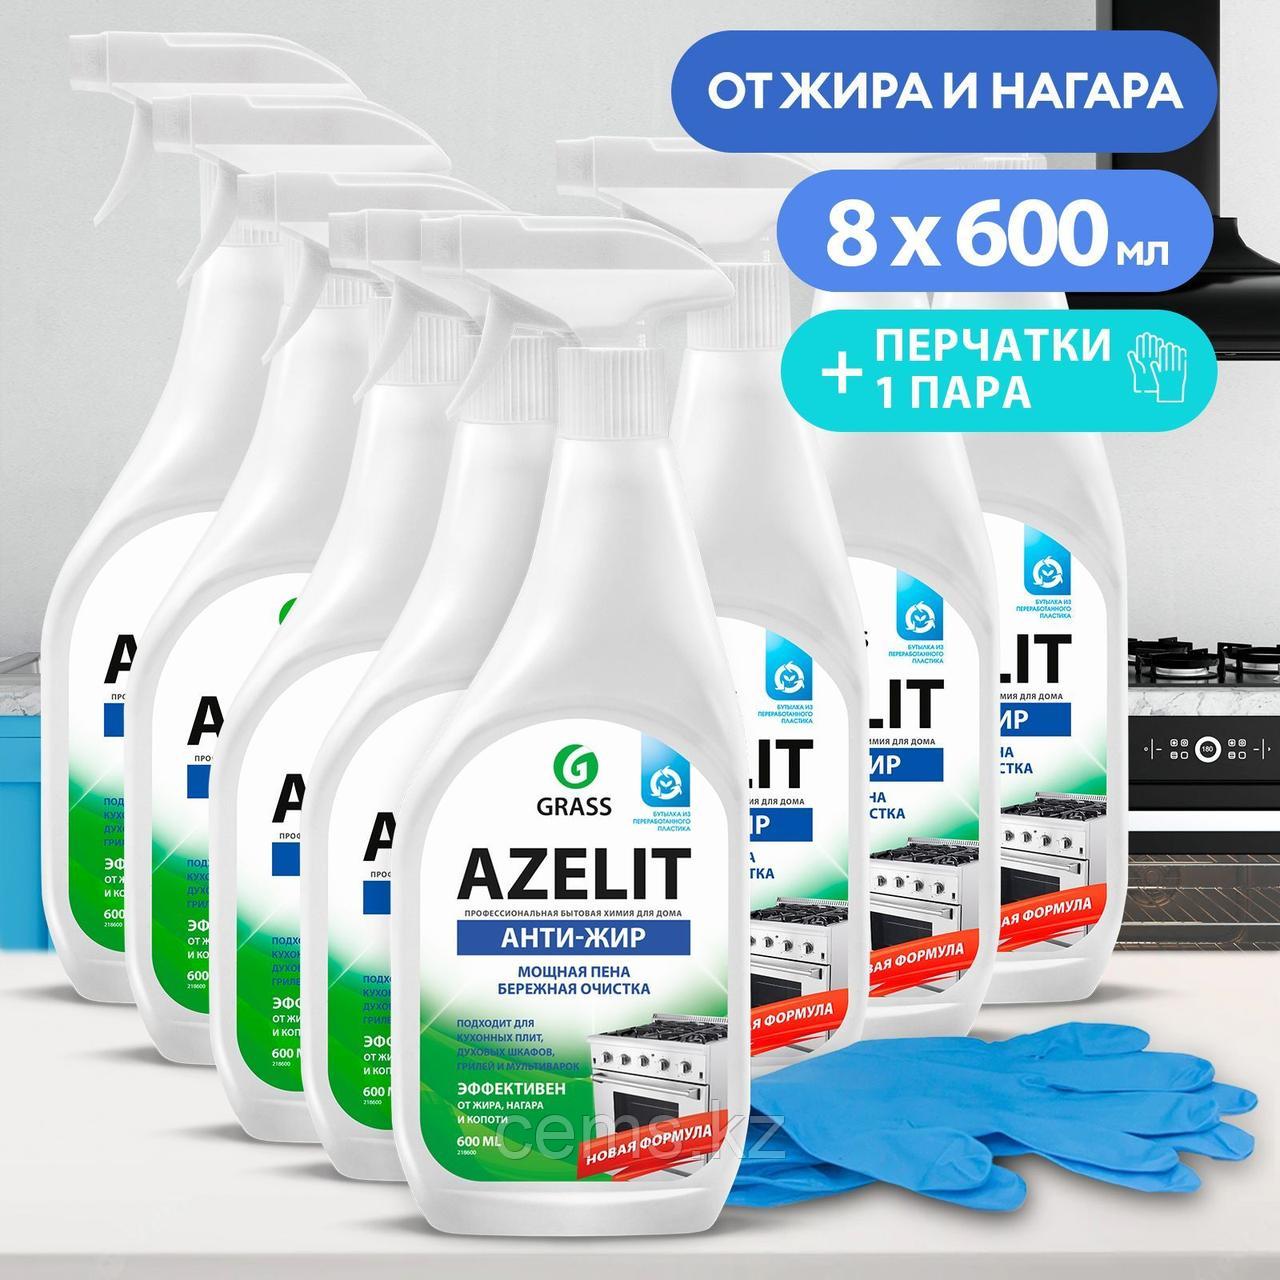 Комплект чистящего средства для кухни Azelit, антижир Азелит, 600 мл.х 8 шт + подарок перчатки (пара)